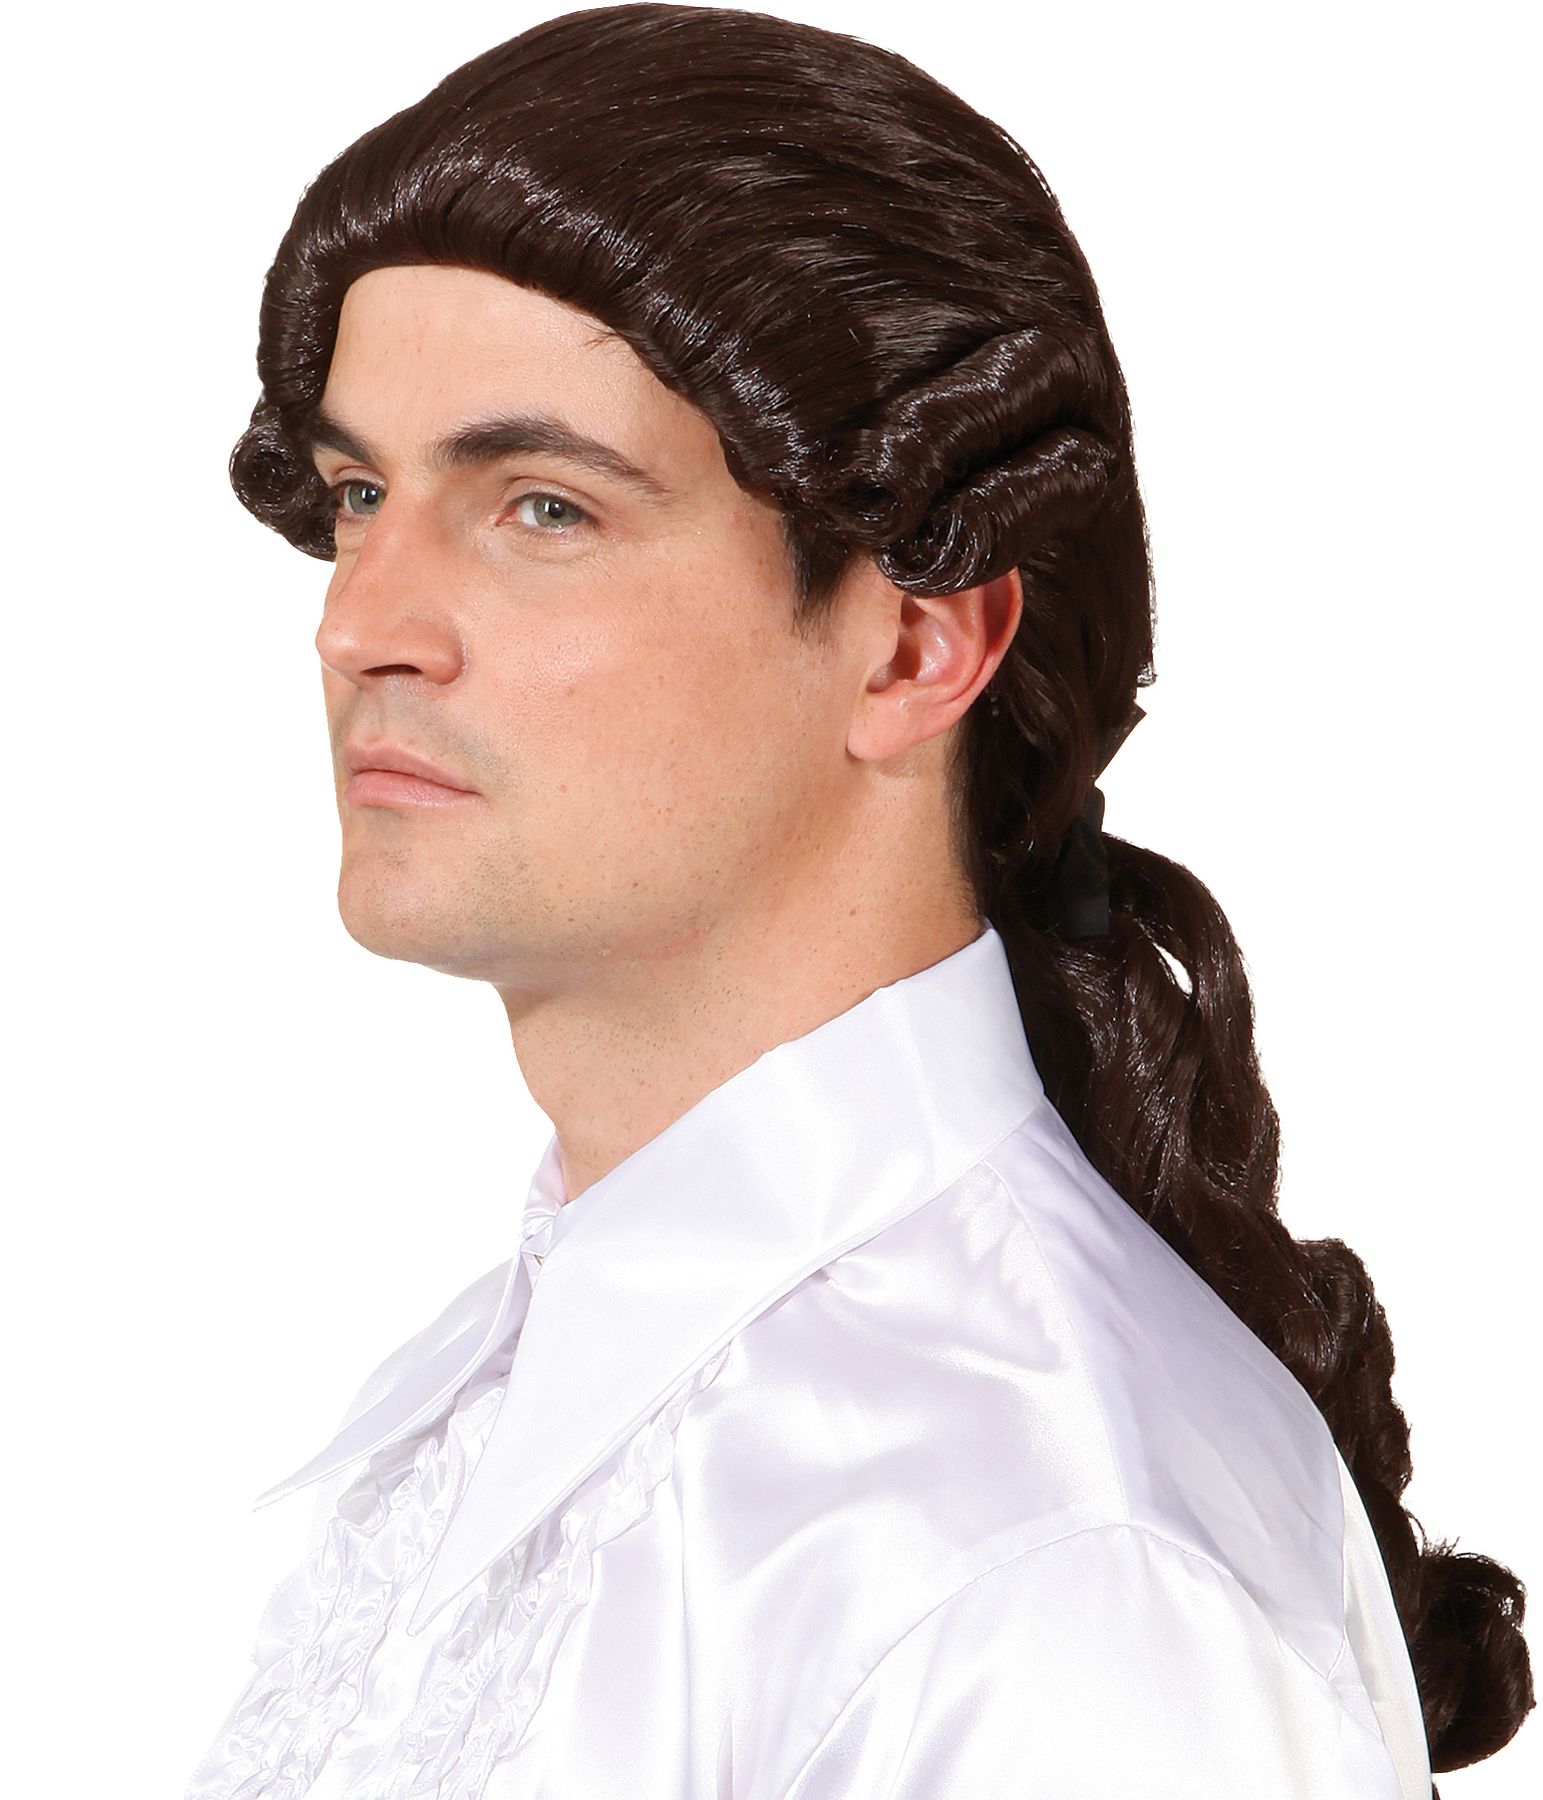 Braided historical men's wig, brown 